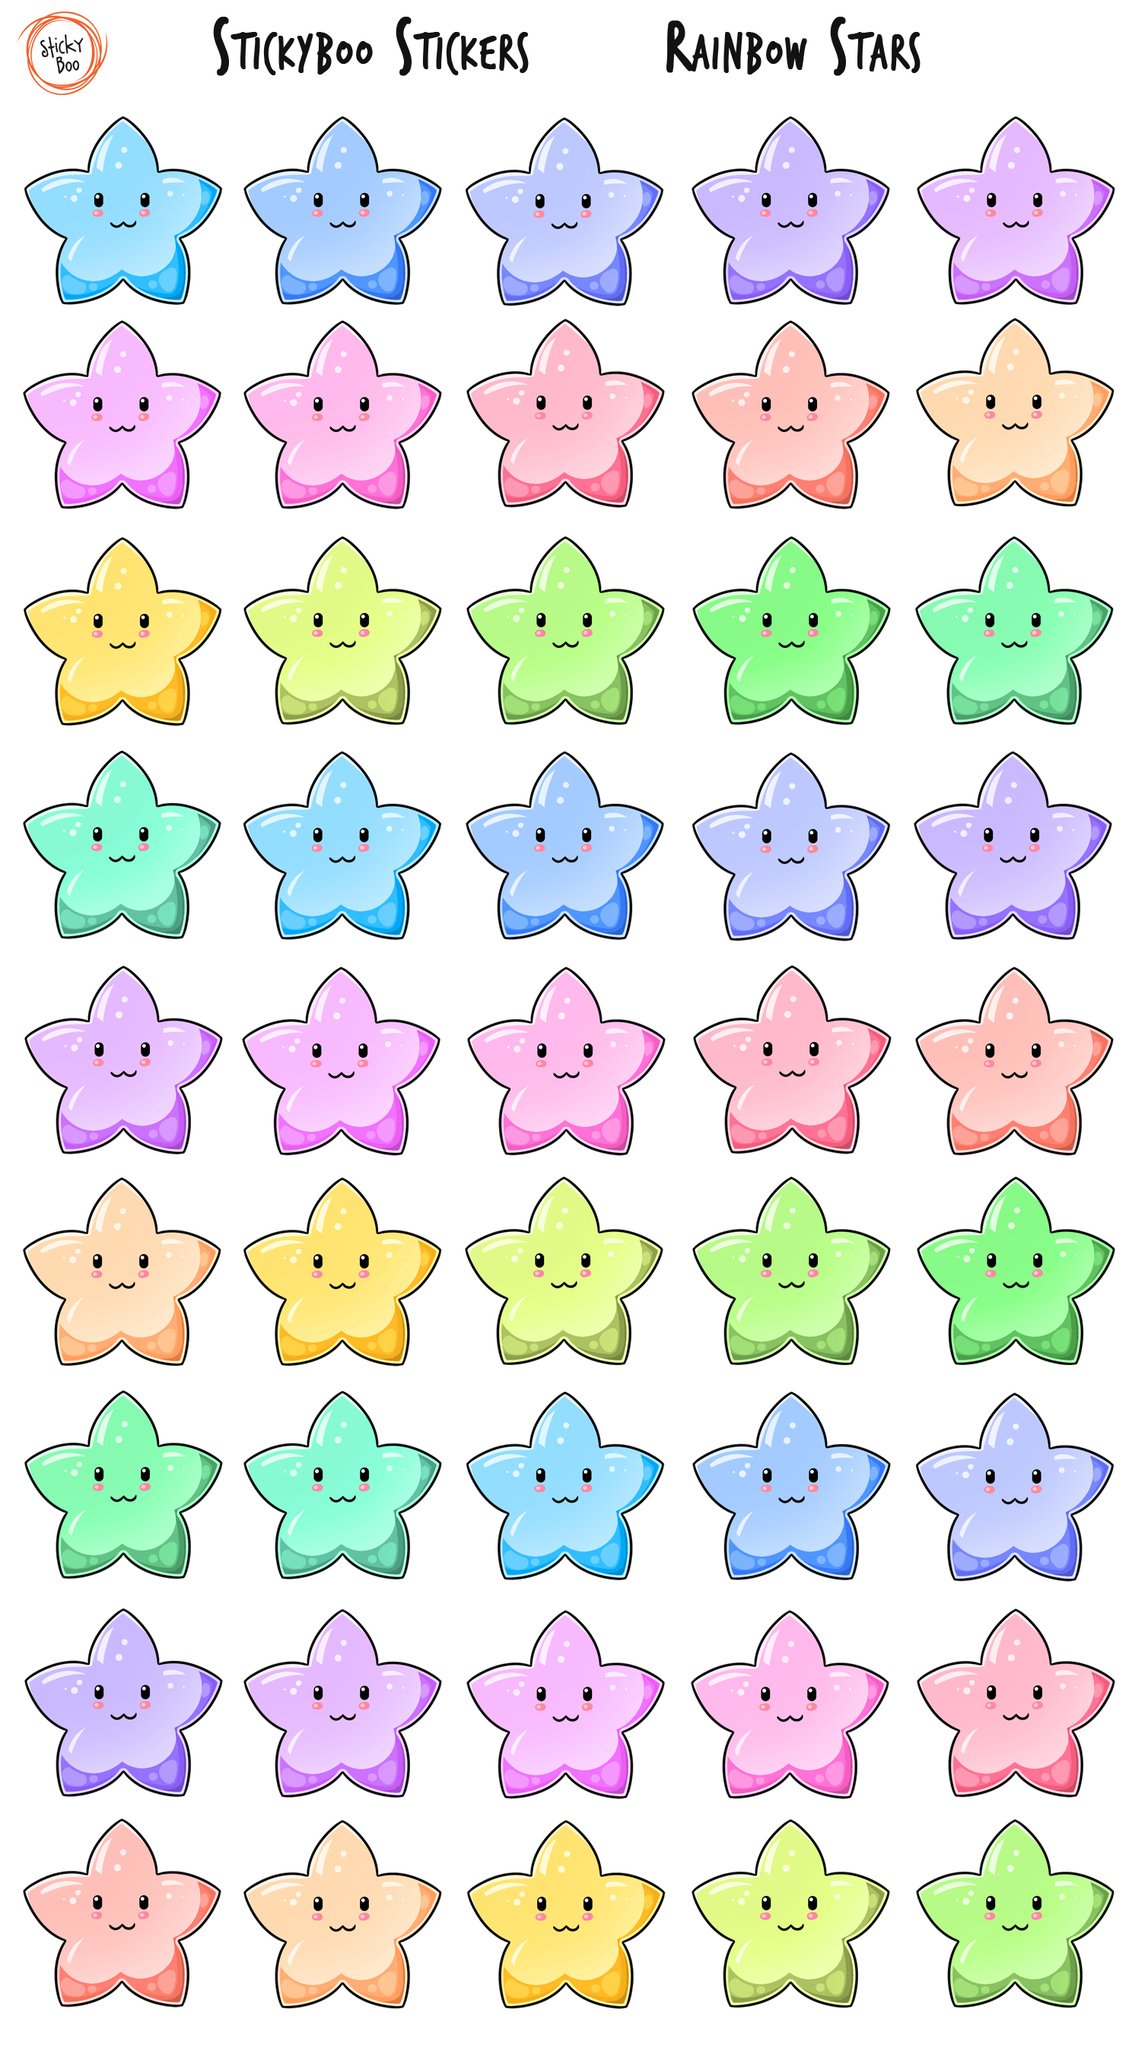 Sticky Boo Reward Stickers - Rainbow Stars